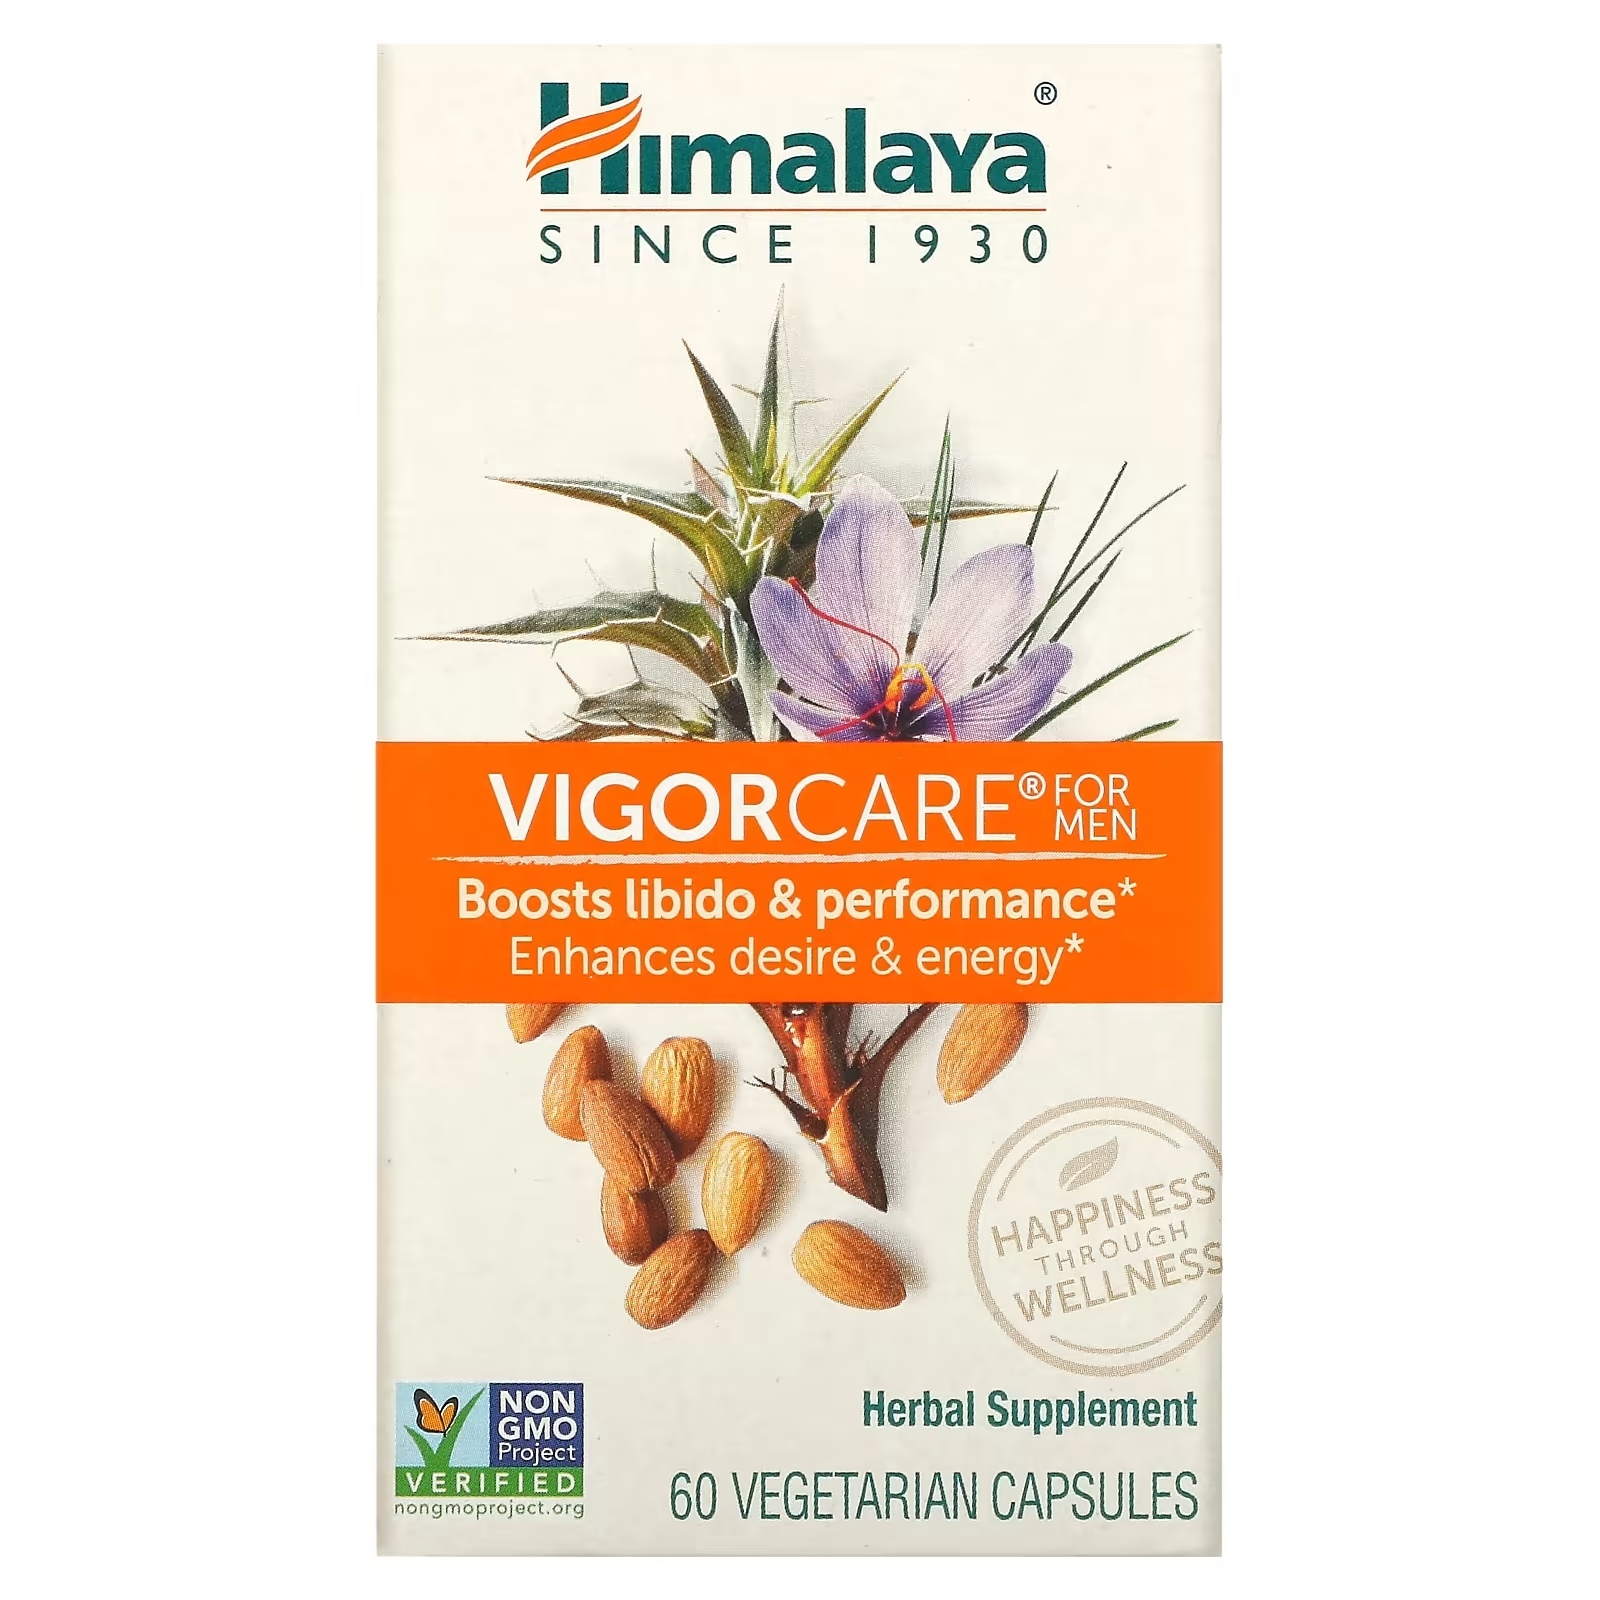 Пищевая Добавка для Мужчин Himalaya VigorCare, 60 вегетарианских капсул пищевая добавка smnutrition для мужчин 60 капсул